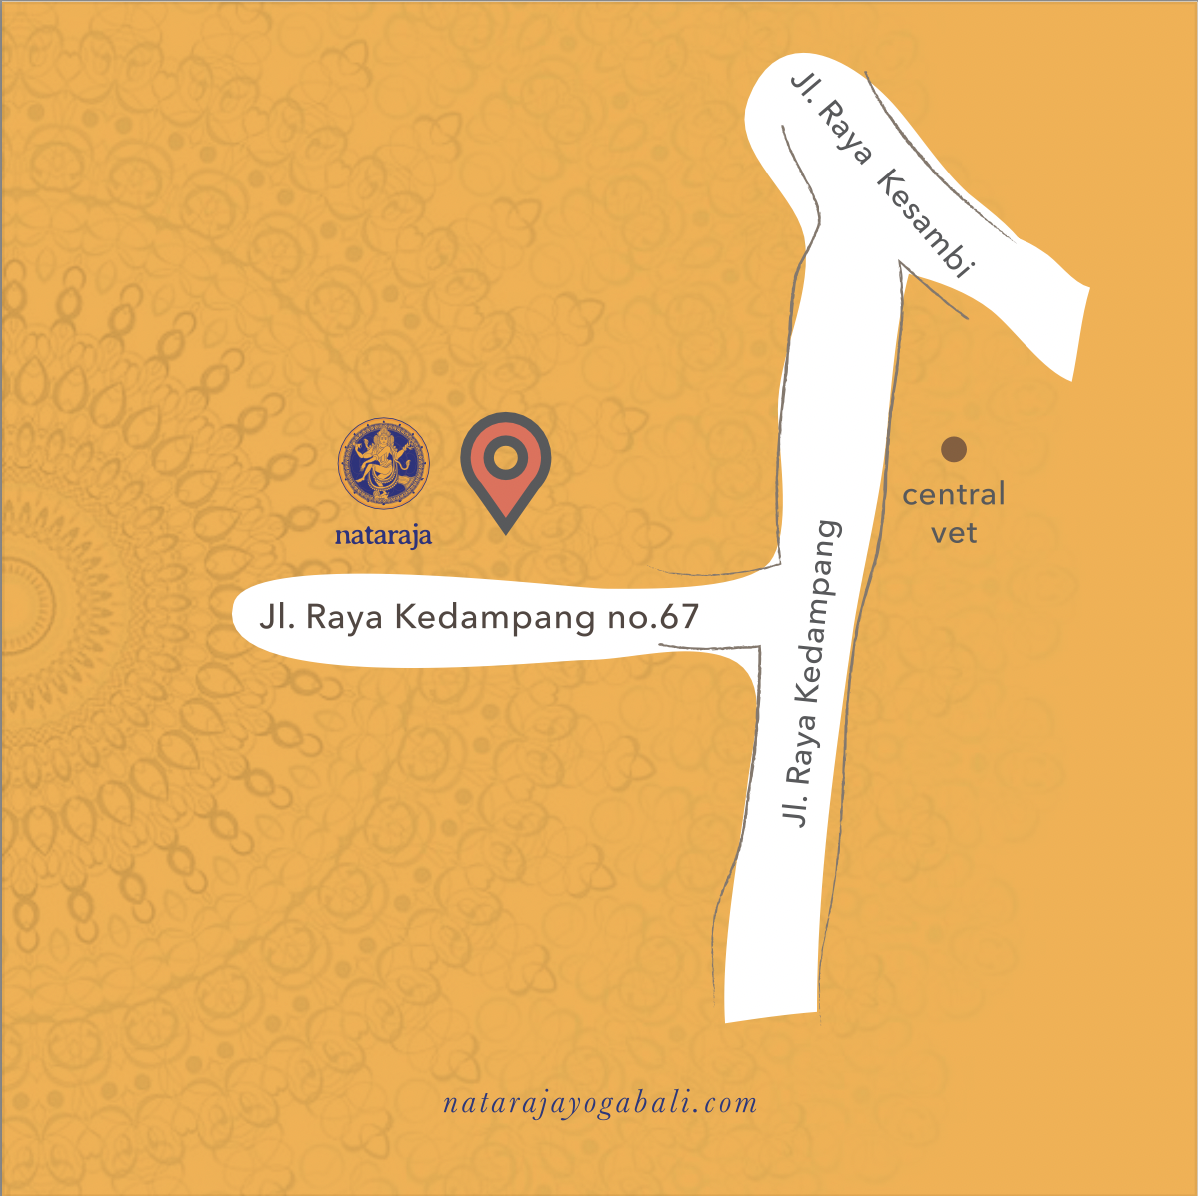 Nataraja Bali Yoga Shala - Map Location